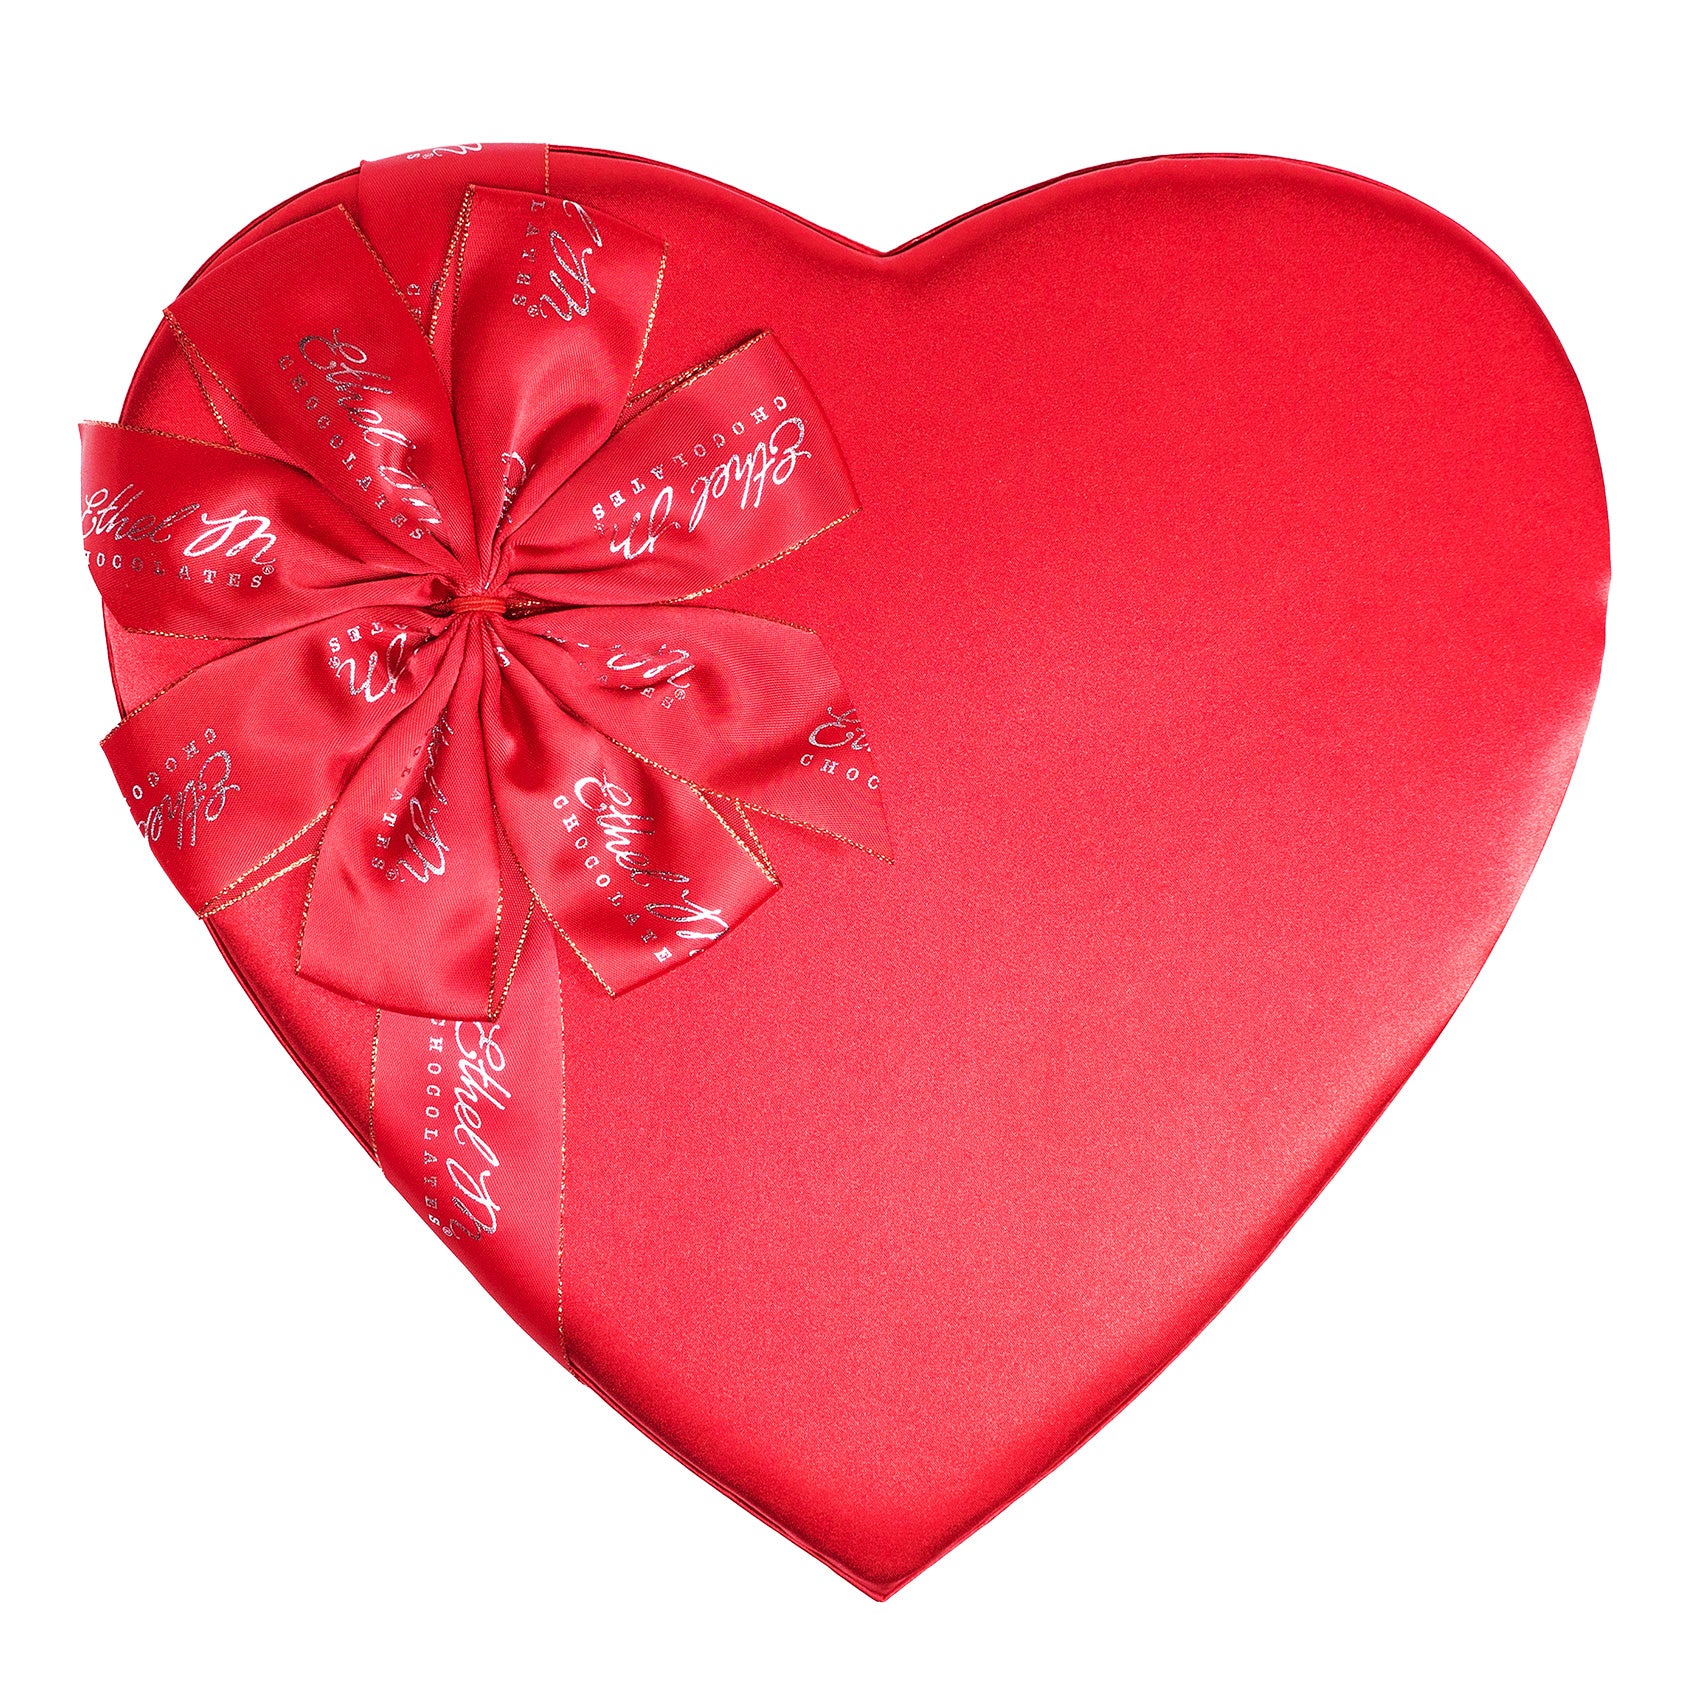 Ethel M Valentine's Day Large Heart Custom Collection Chocolate Gift Box - Hero Image